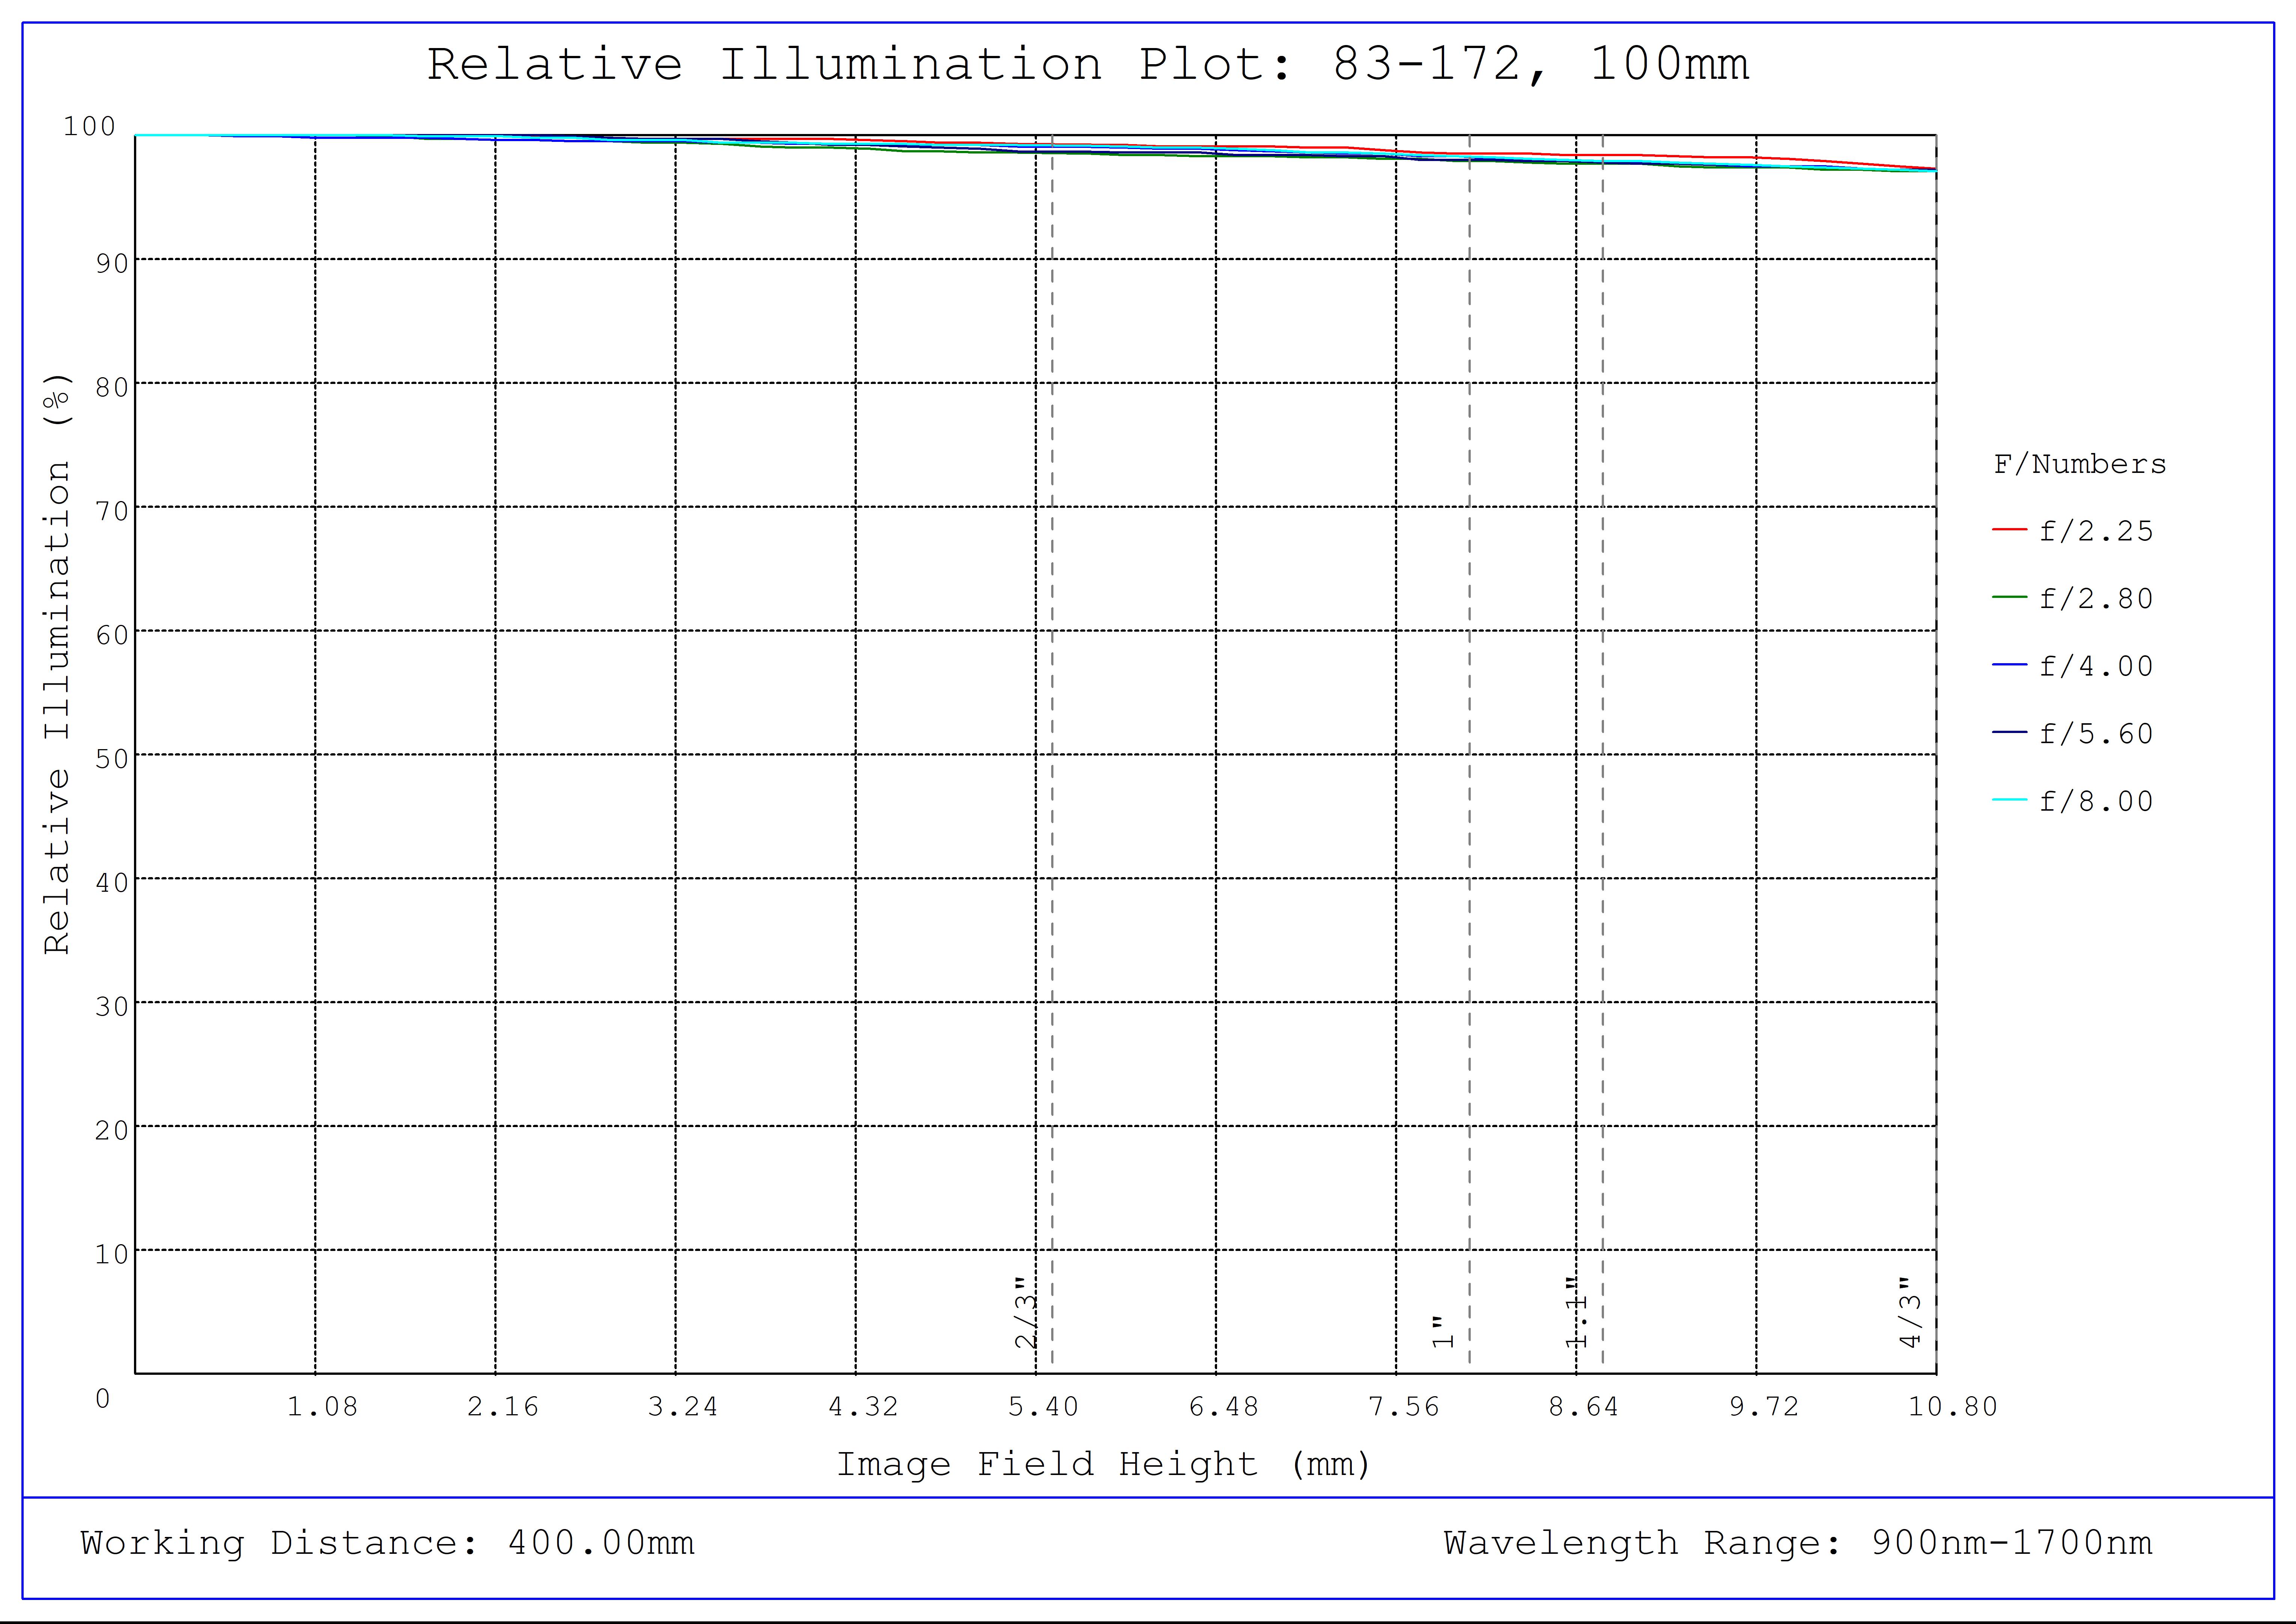 #83-172, 100mm SWIR Series Fixed Focal Length Lens, M42 x 1.0, Relative Illumination Plot